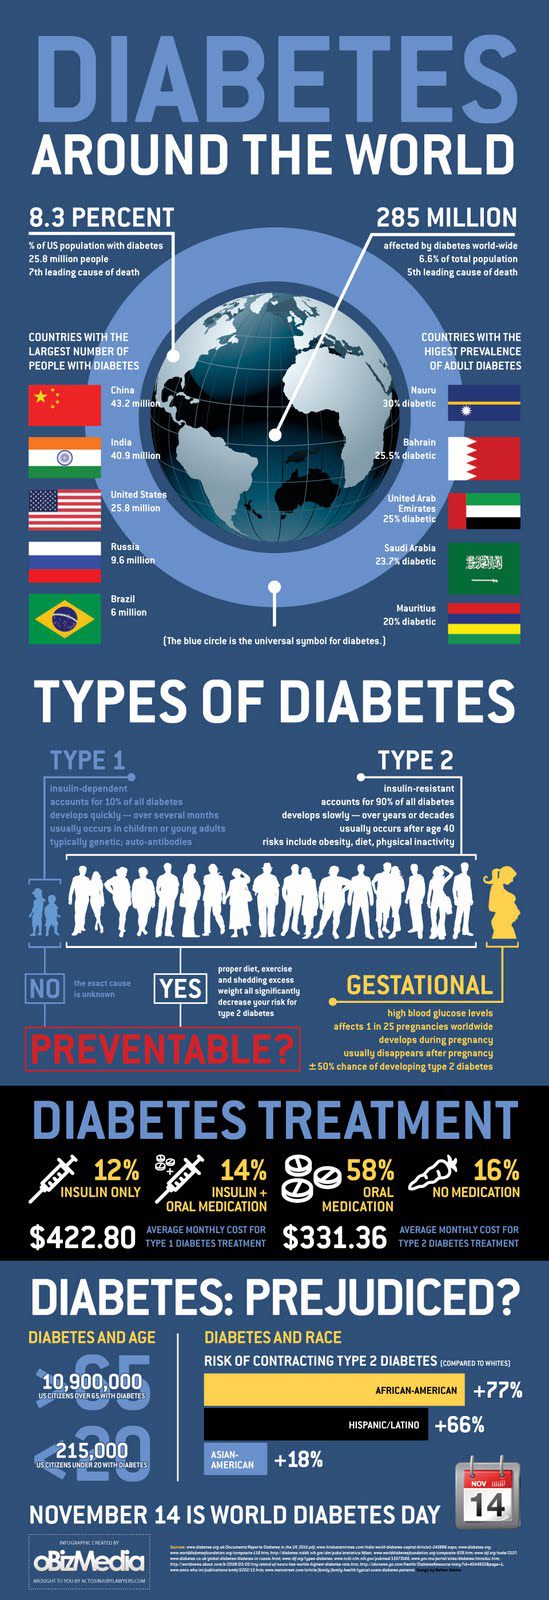 Diabetes Rates Worldwide